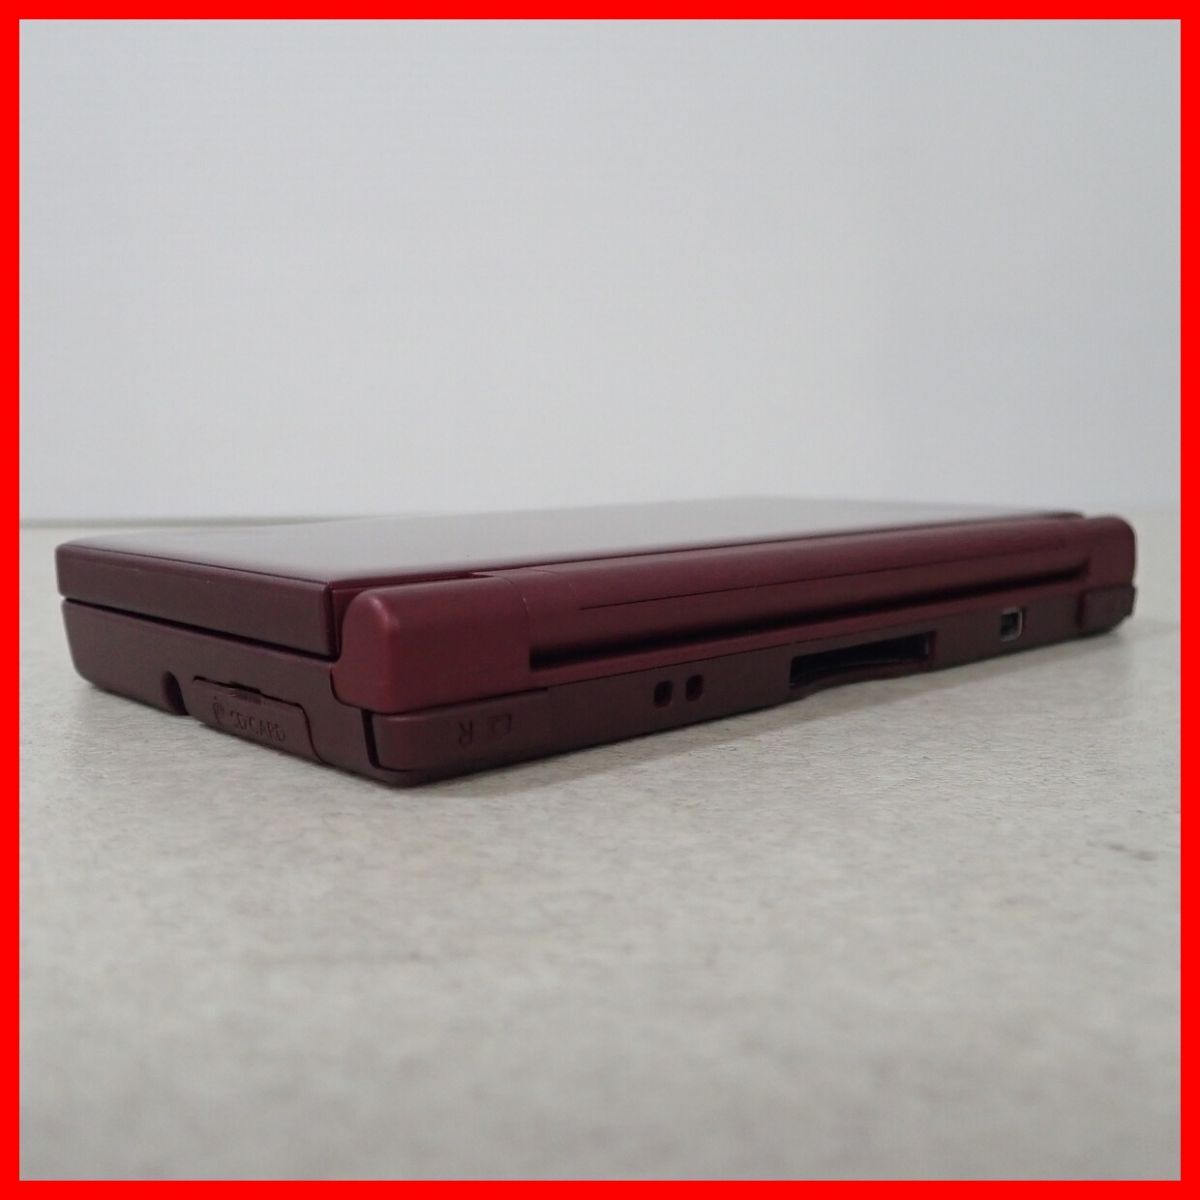  рабочий товар Nintendo DSiLL корпус UTL-001 wine red nintendo Nintendo коробка мнение есть [10